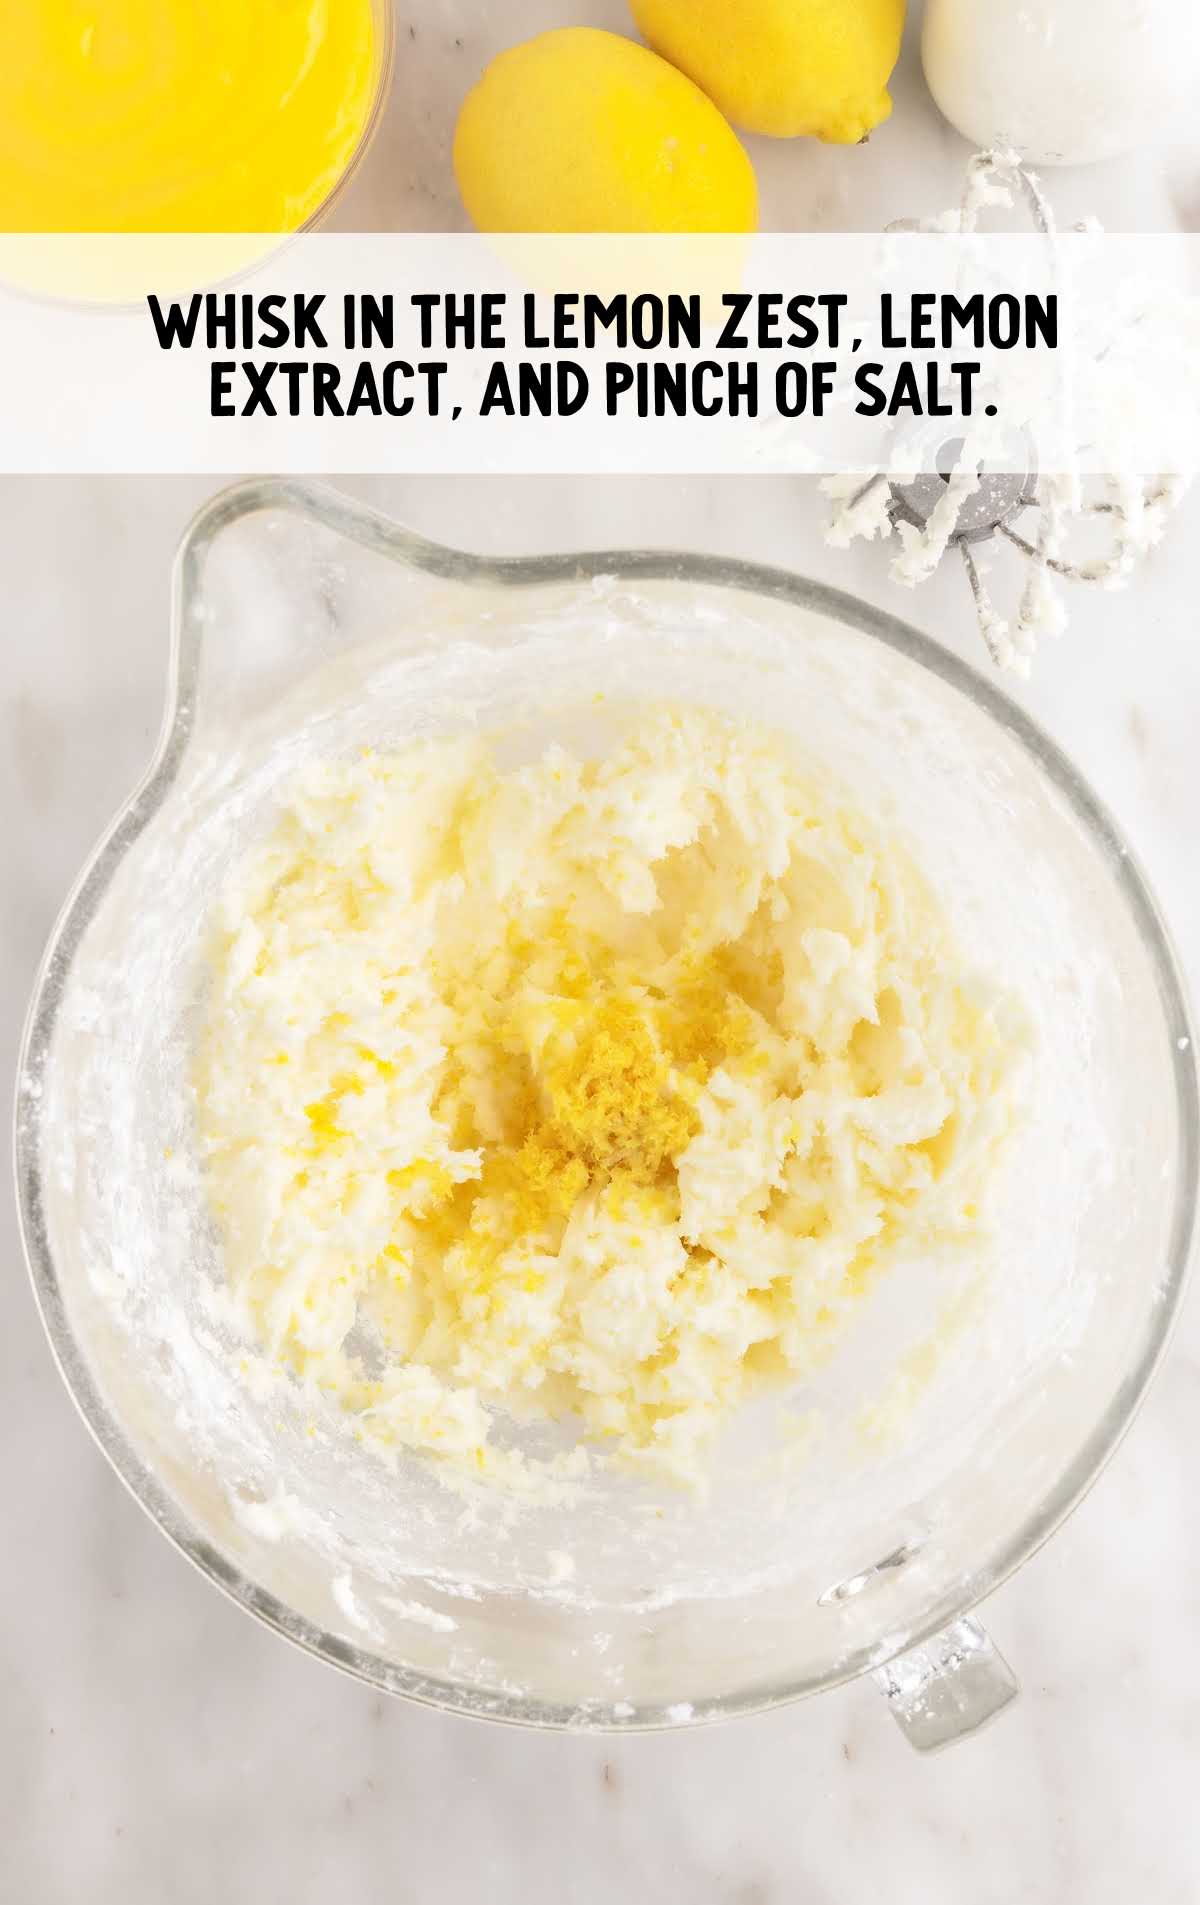 lemon zest, lemon extract, and salt whisked together